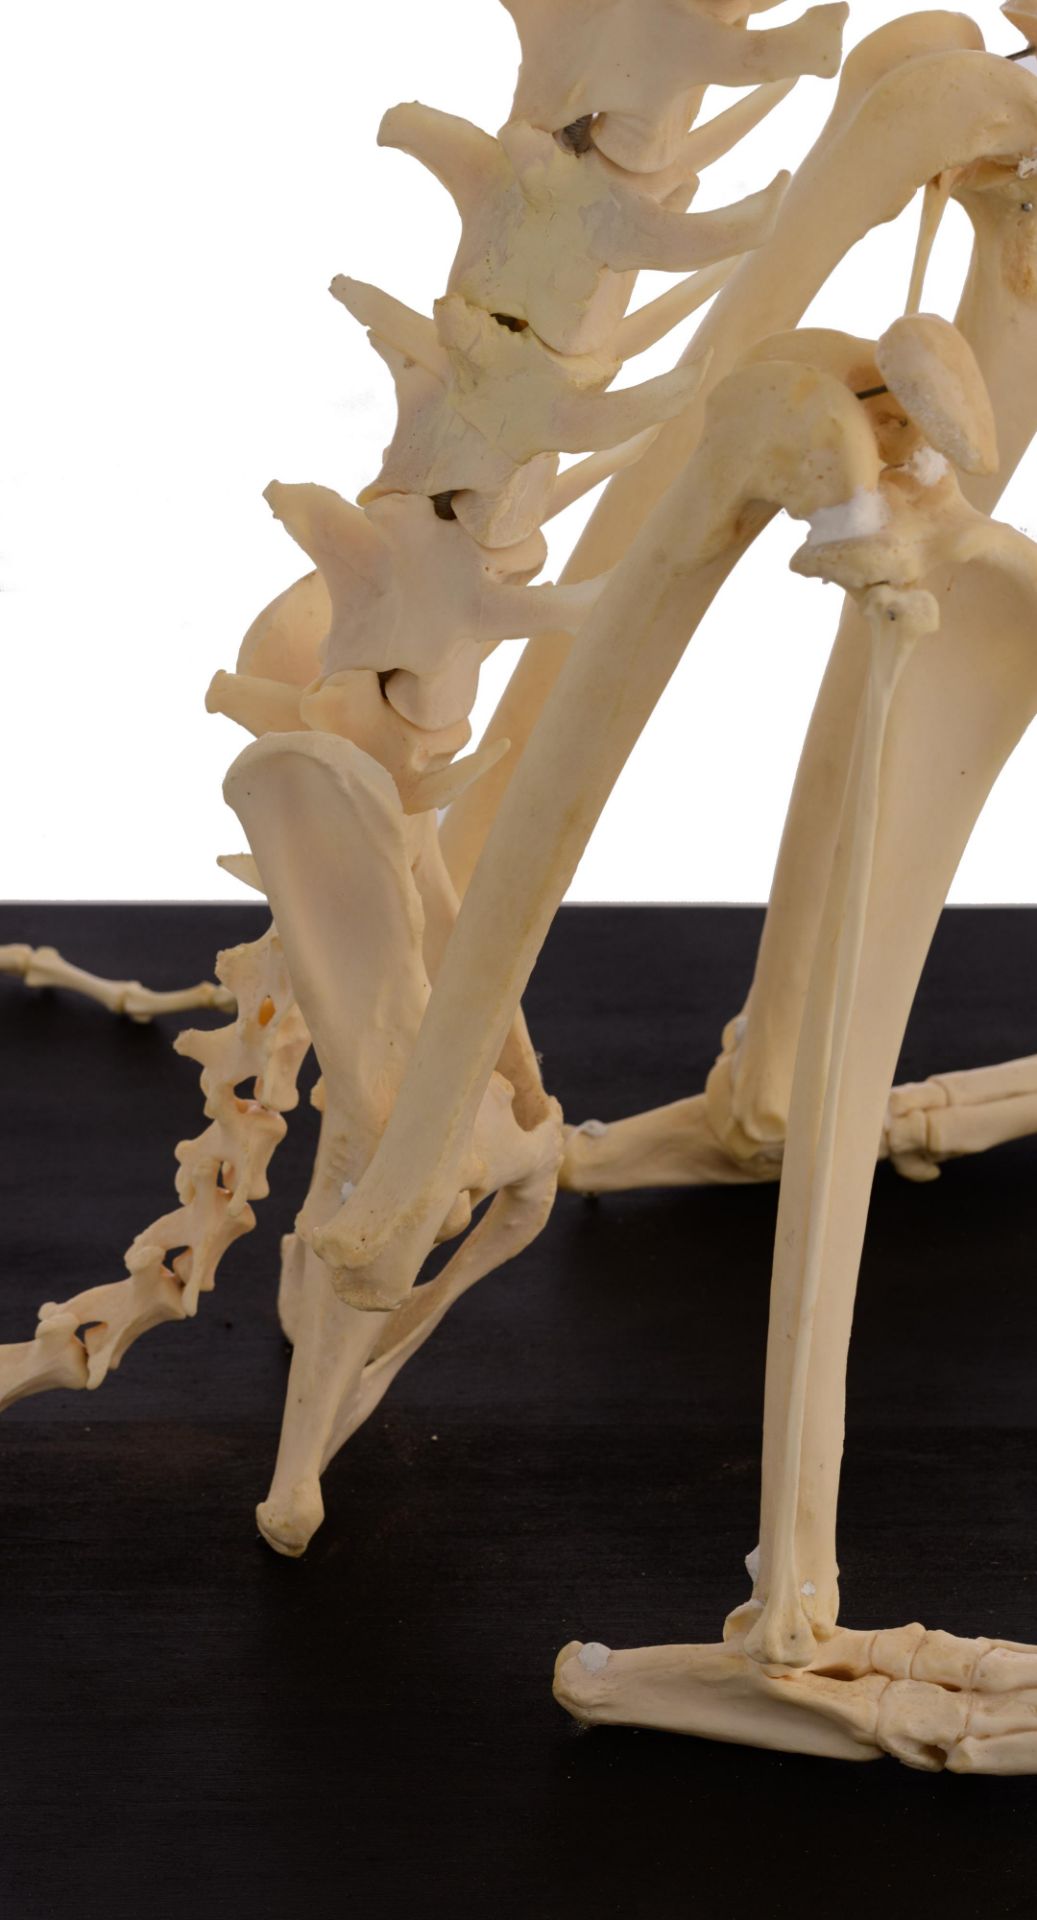 The skeleton of a cheetah (Acinonyx jubatus), H 91 cm - Image 10 of 13